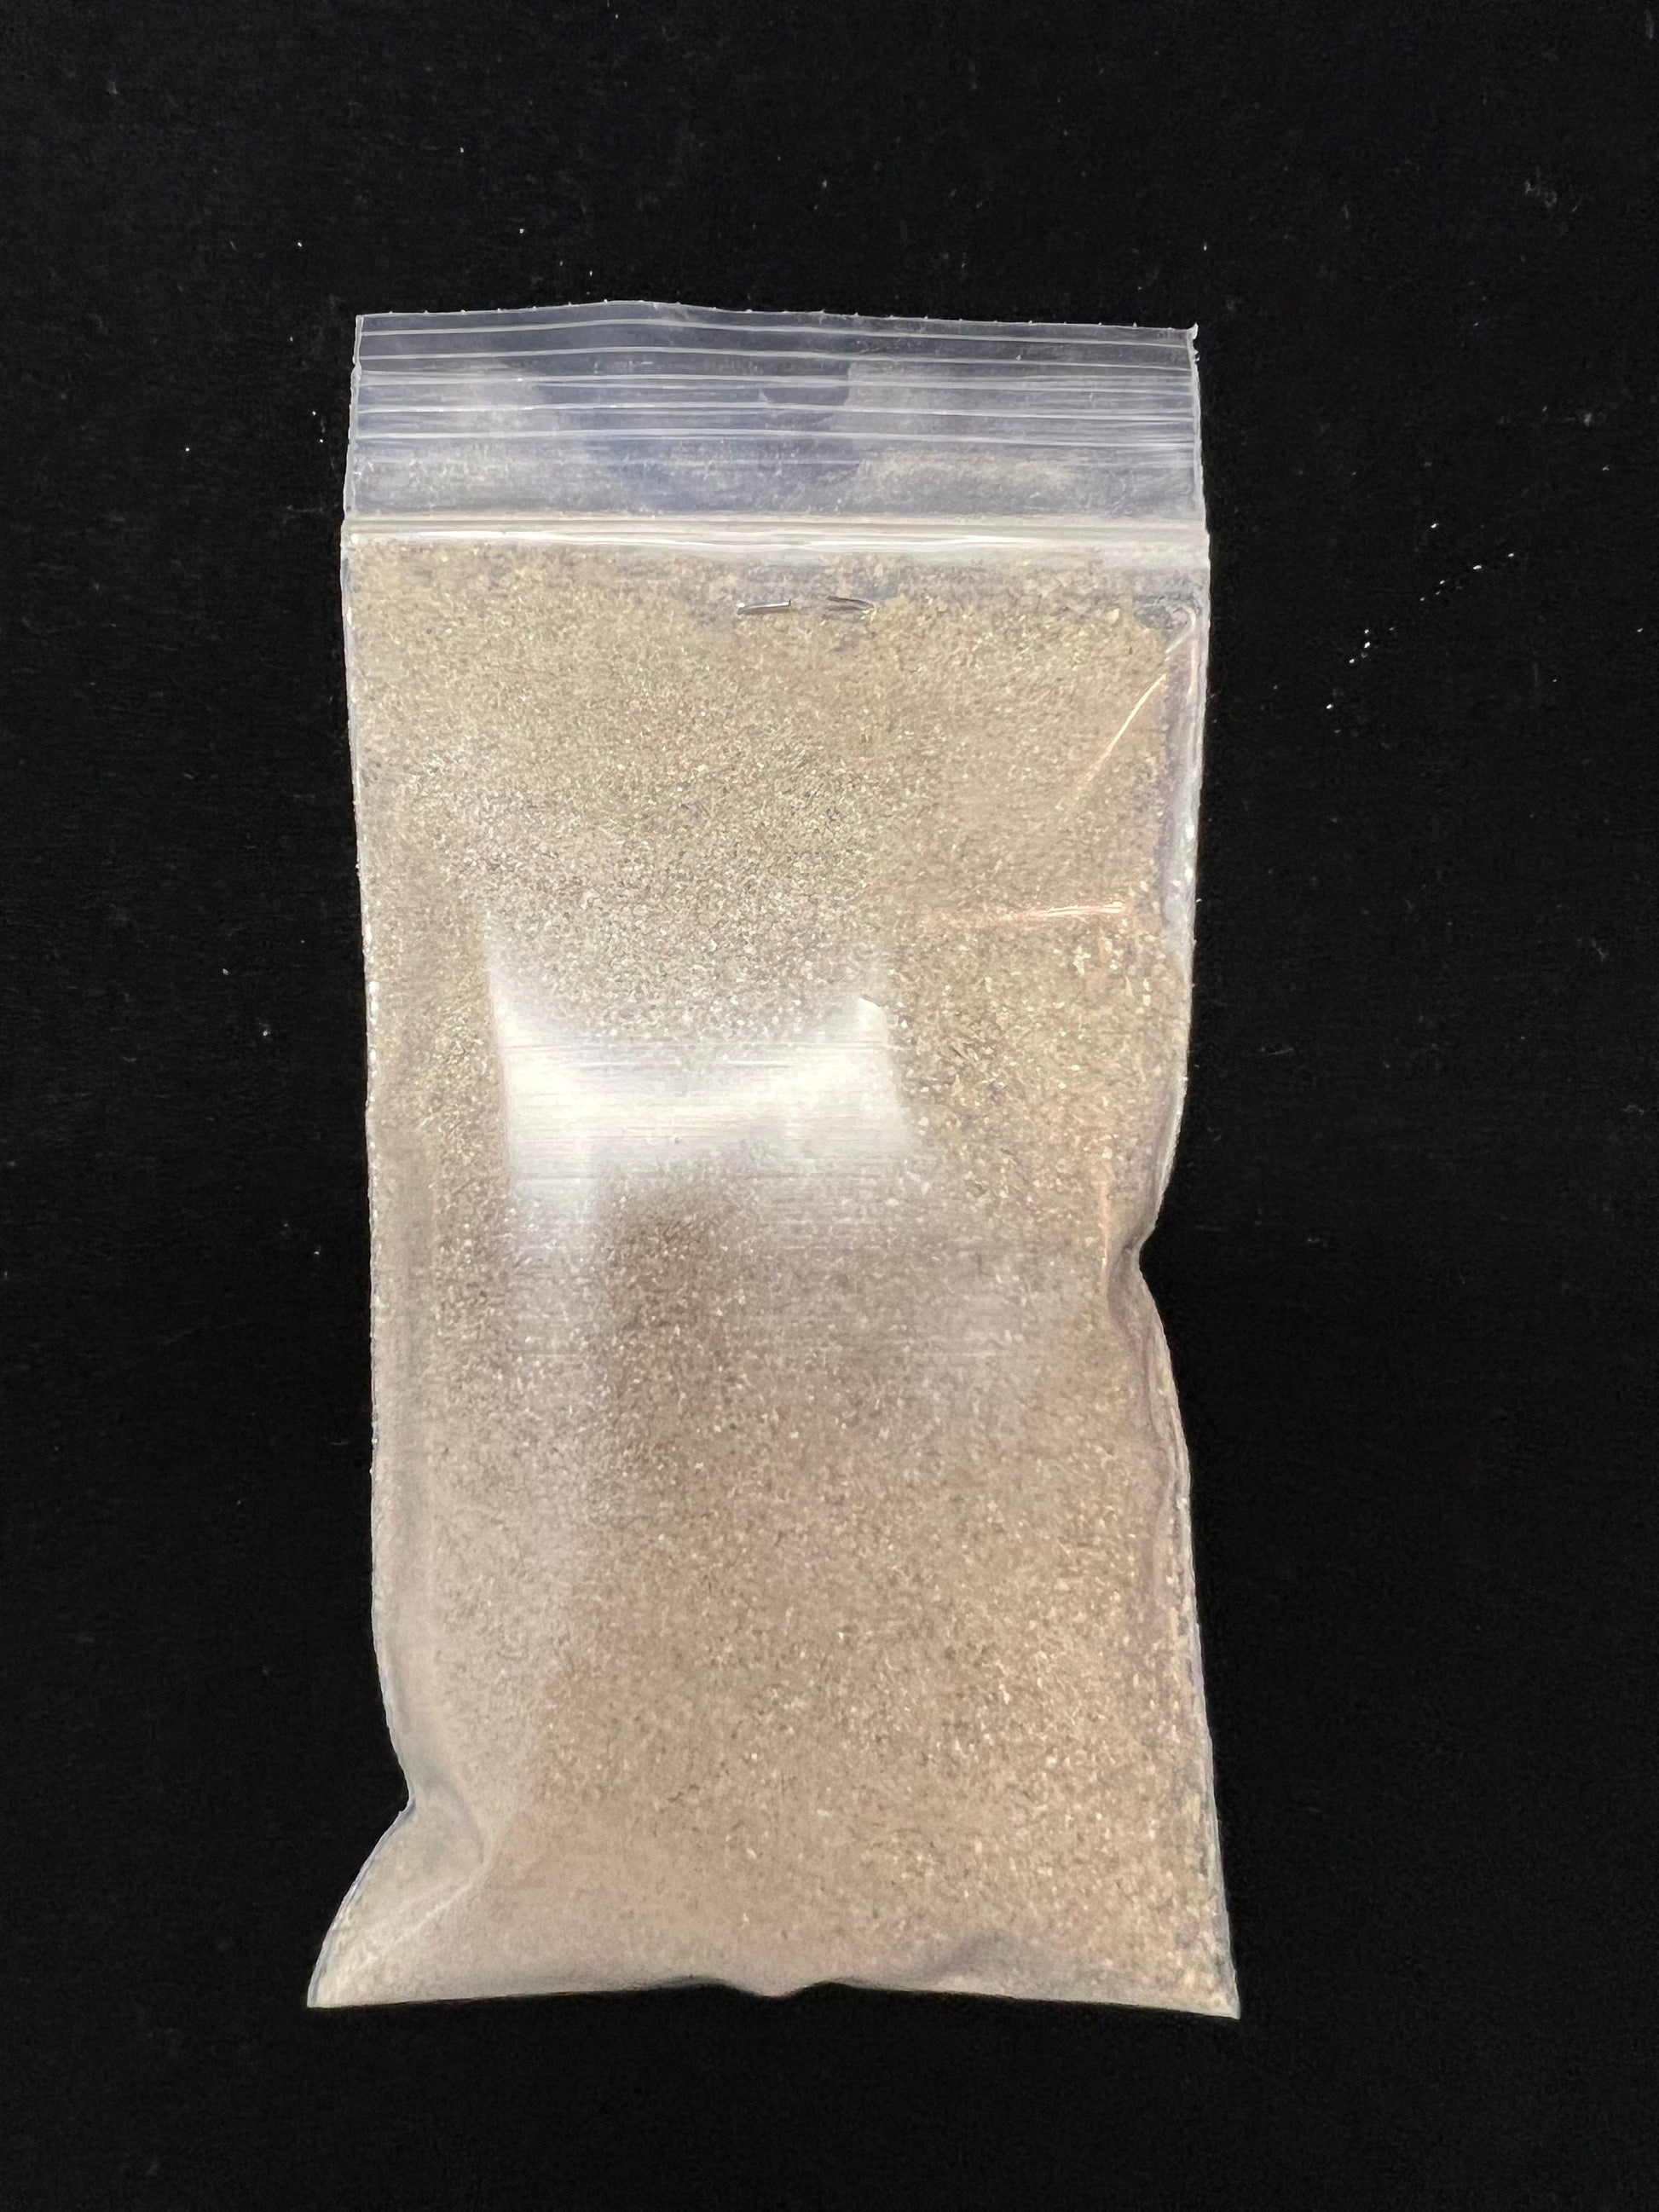 Palo Santo Resin Powder | 3 ounces | Natural Tree Resin | Peru | Premium Quality Palo Santo Resin